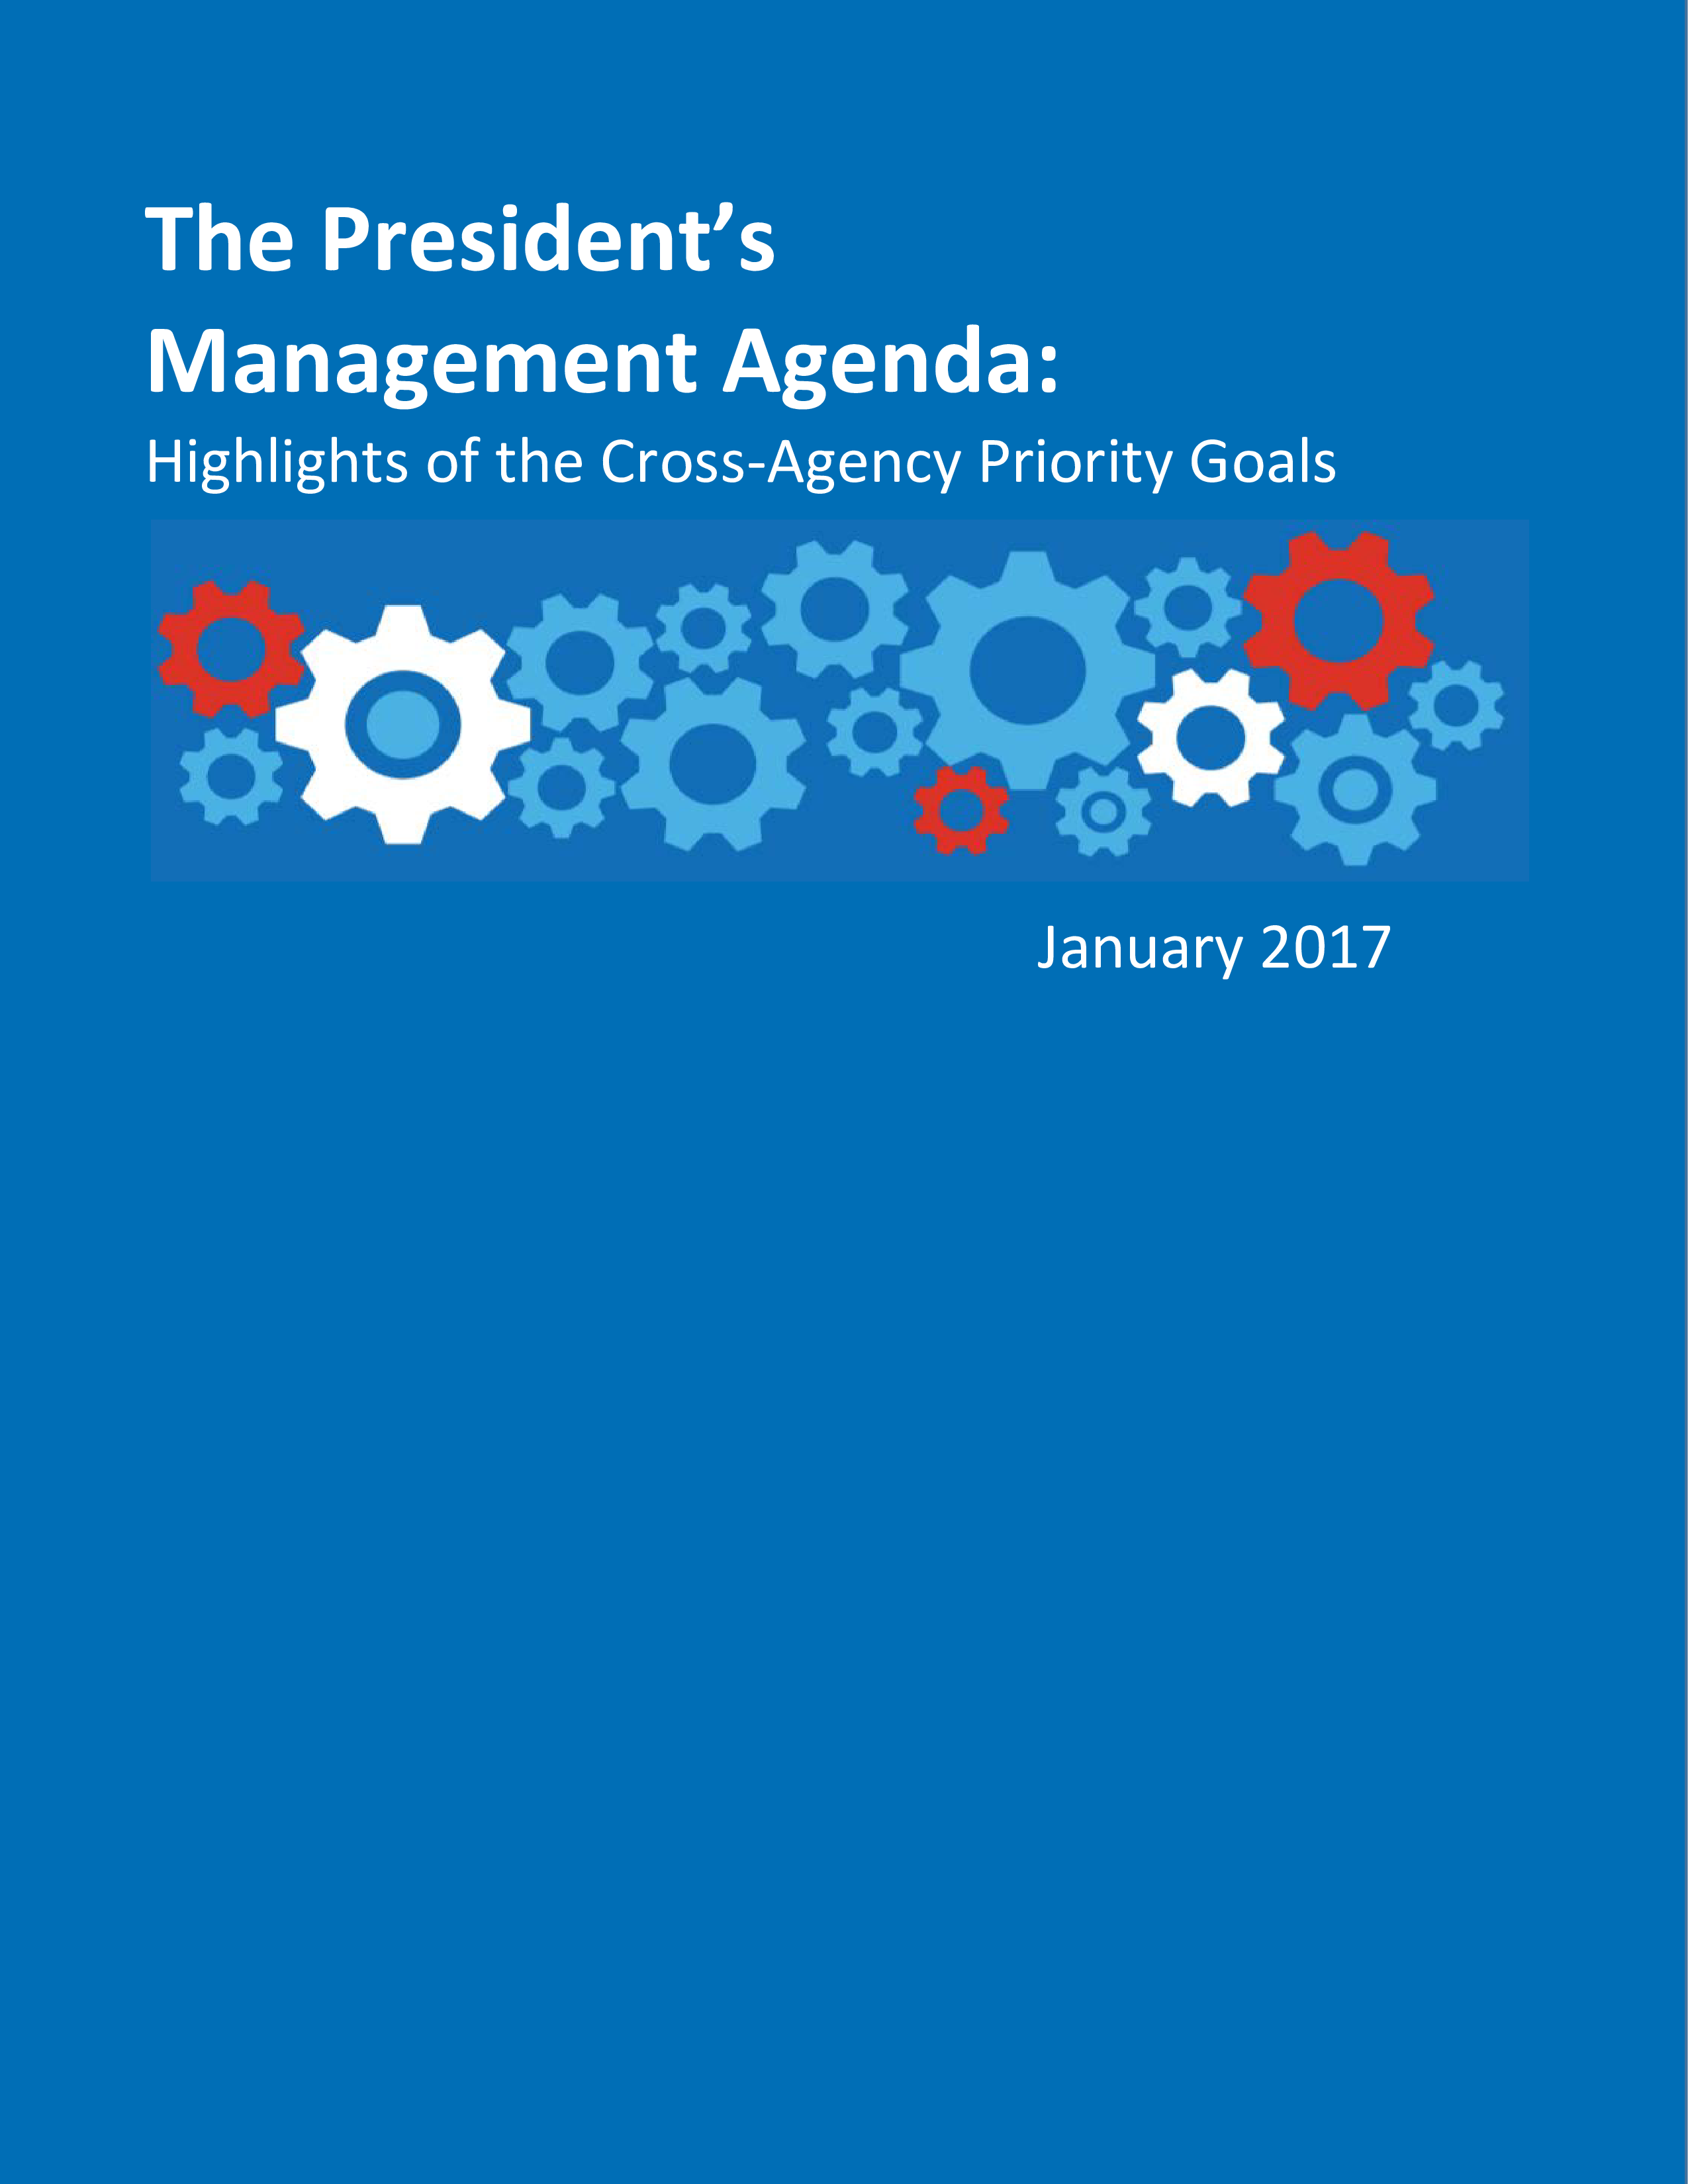 President’S Management Agenda main image